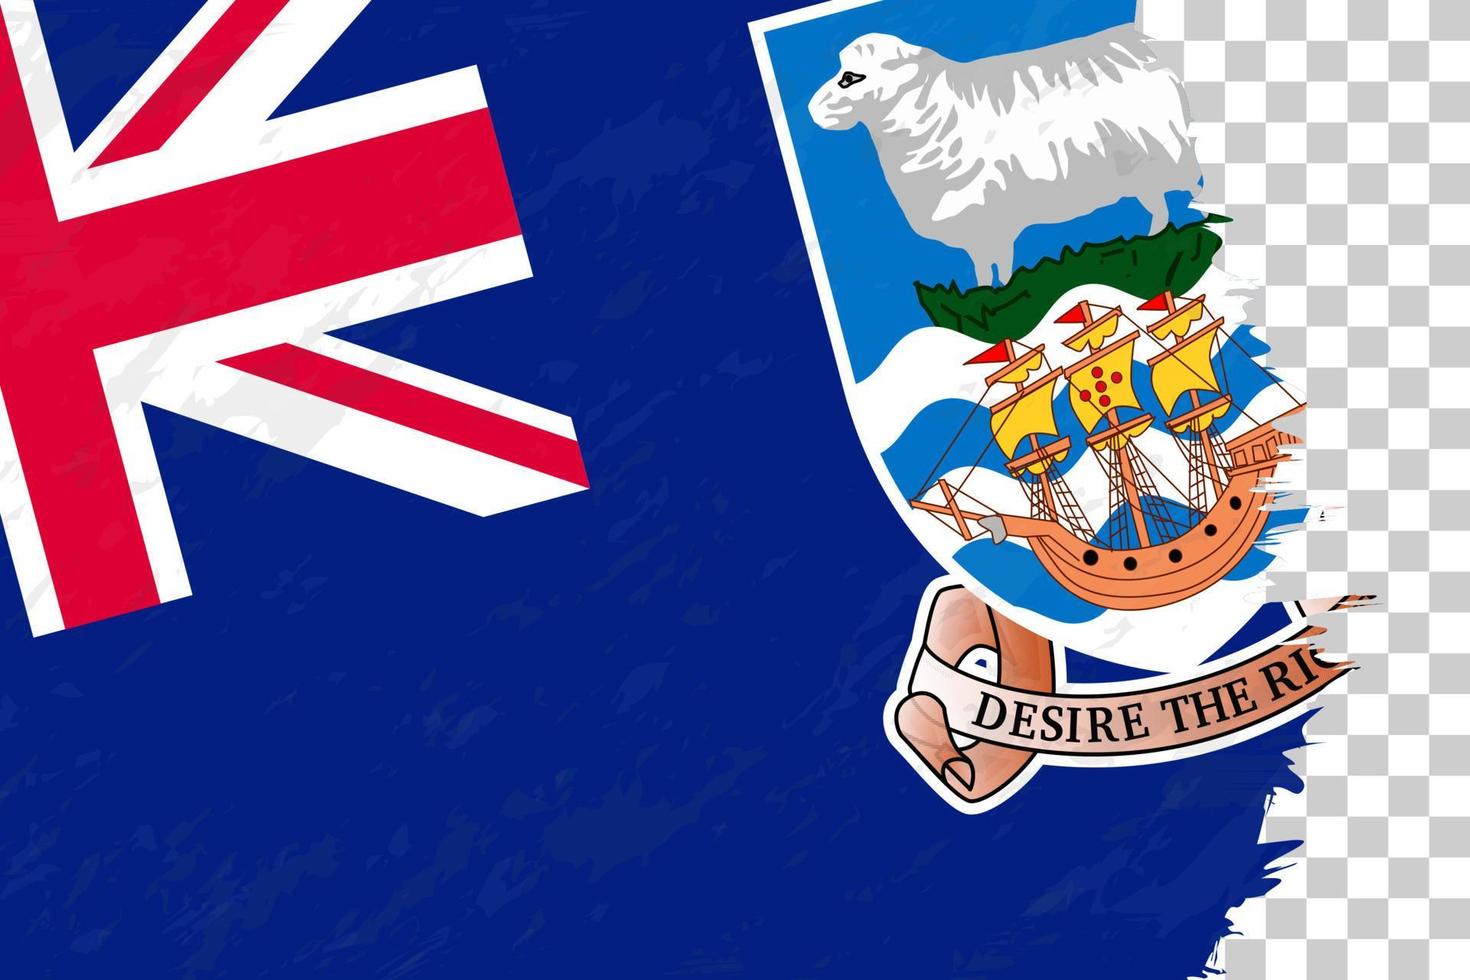 Horizontal Abstract Grunge Brushed Flag of Falkland Islands on Transparent Grid. vector